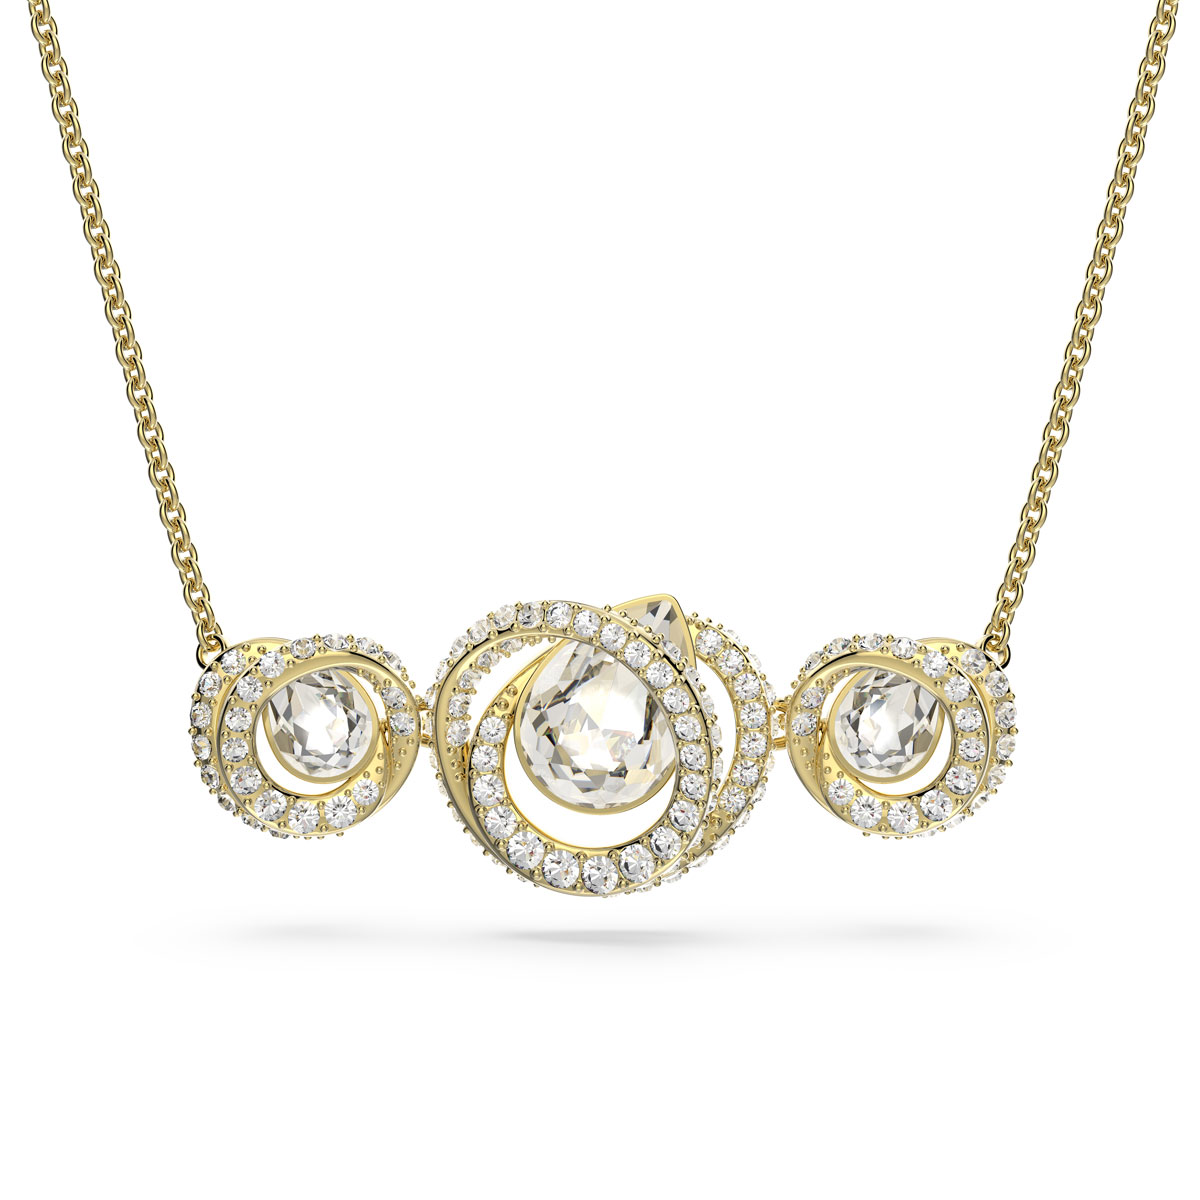 Swarovski Generation Necklace, White, Gold-Tone Plated